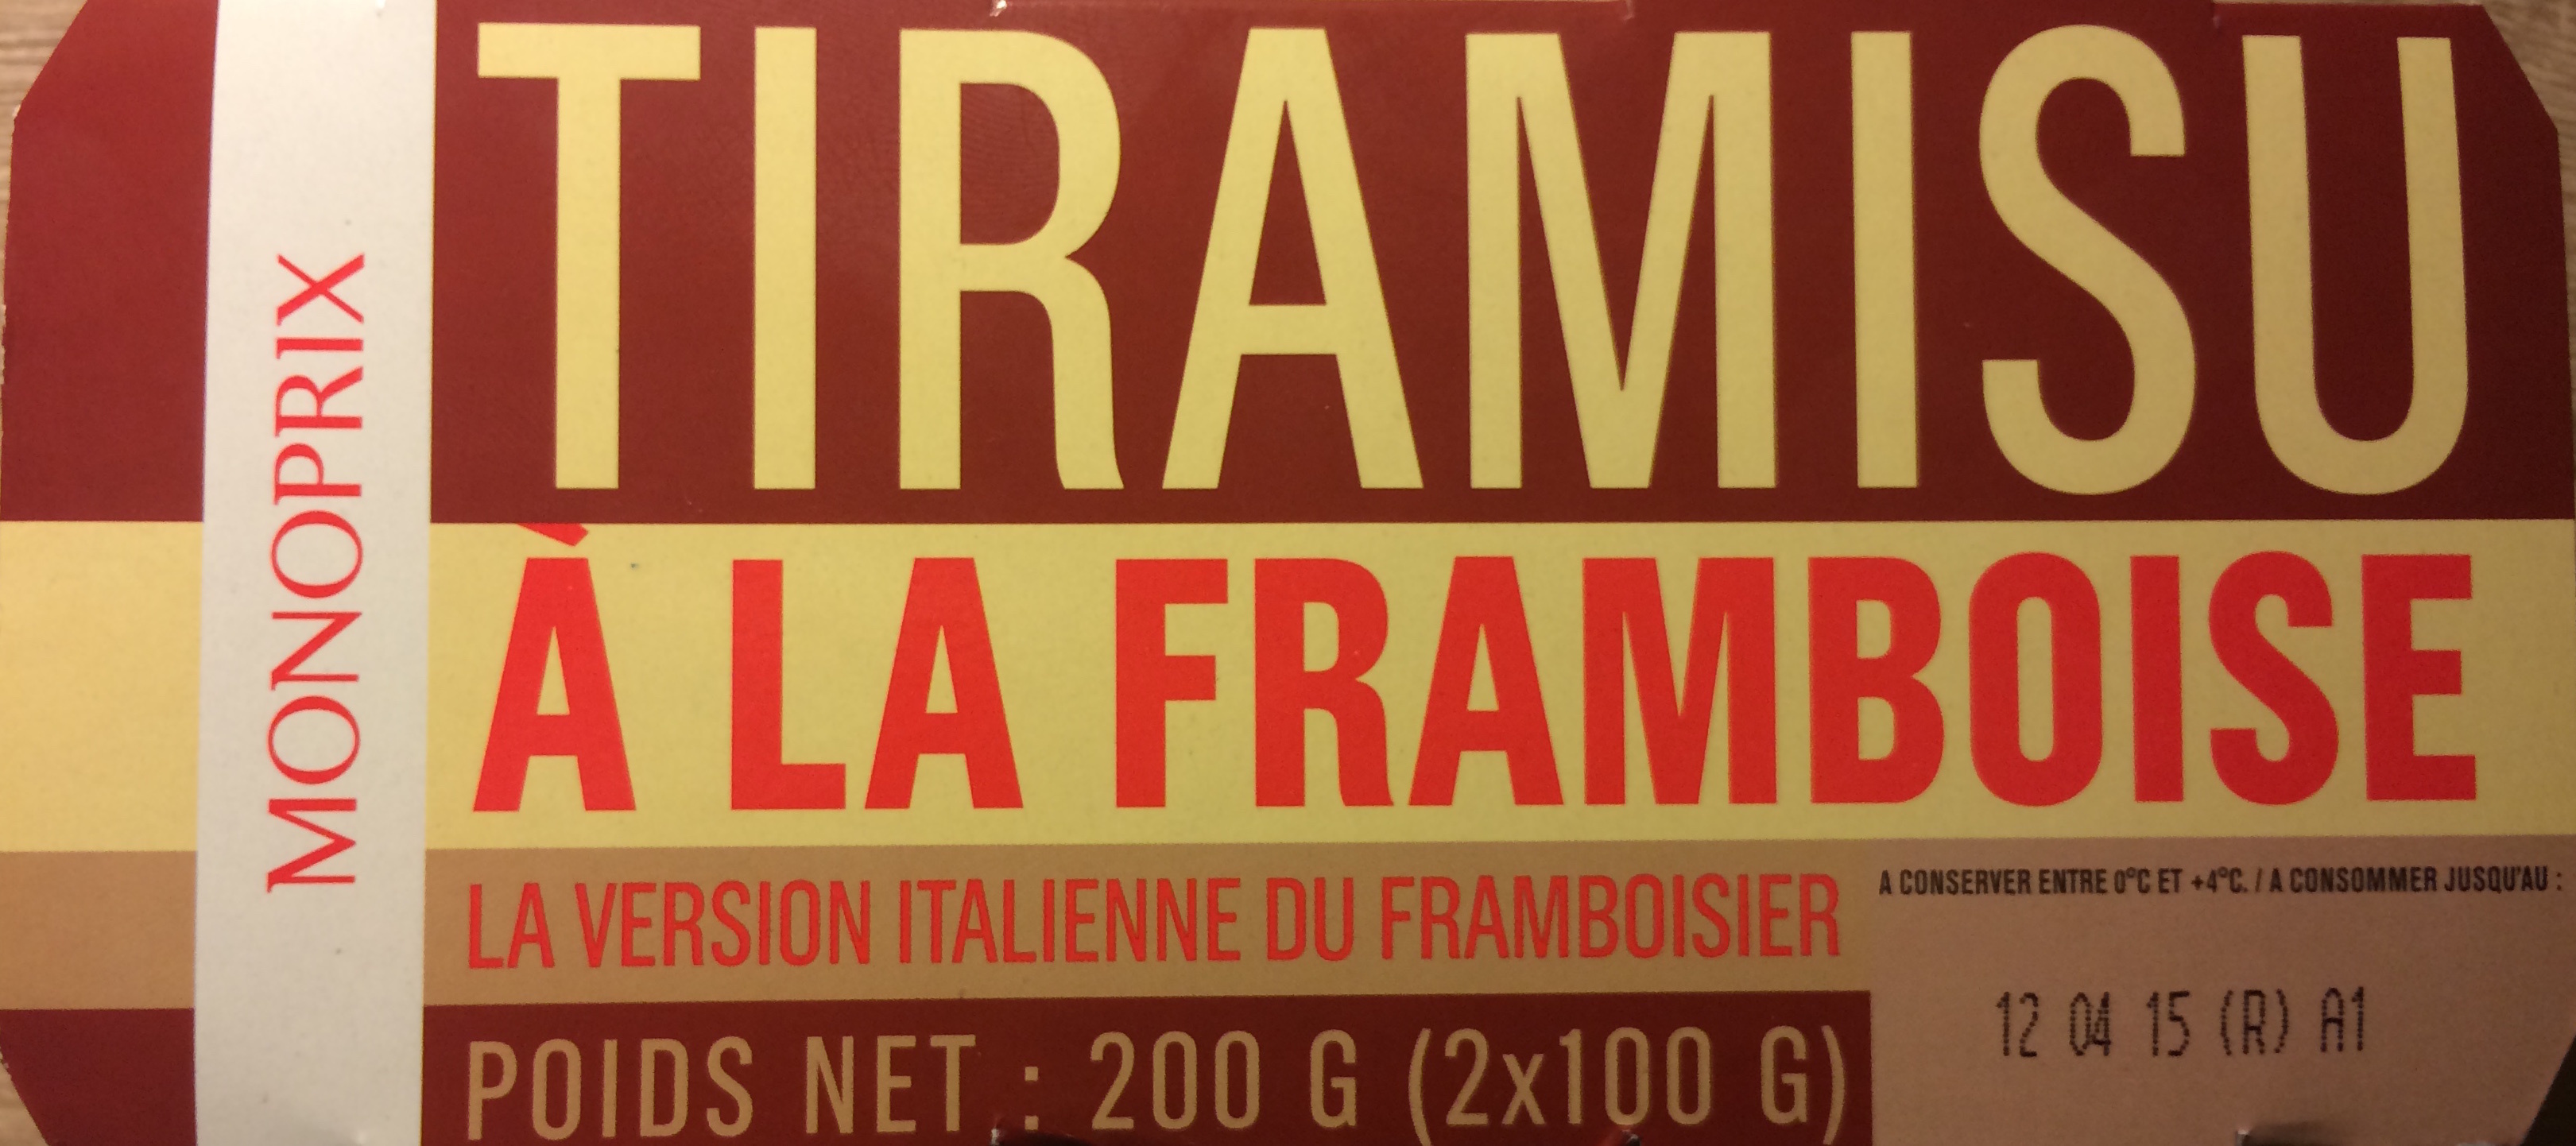 Tiramisu à la framboise - Product - fr